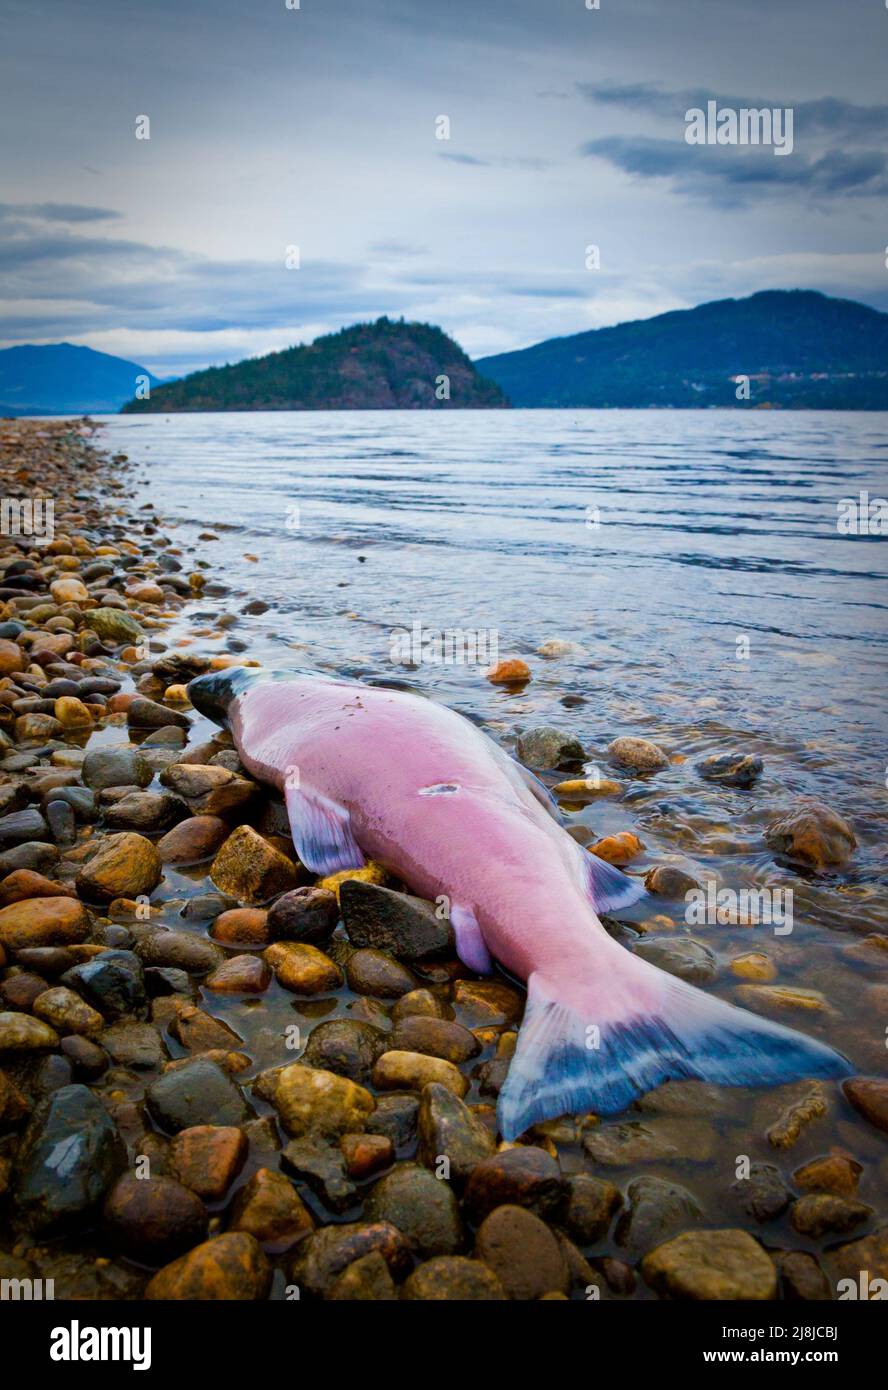 Dead spawning sockeye salmon on the shore of Shushwap Lake, British Columbia, Canada Stock Photo